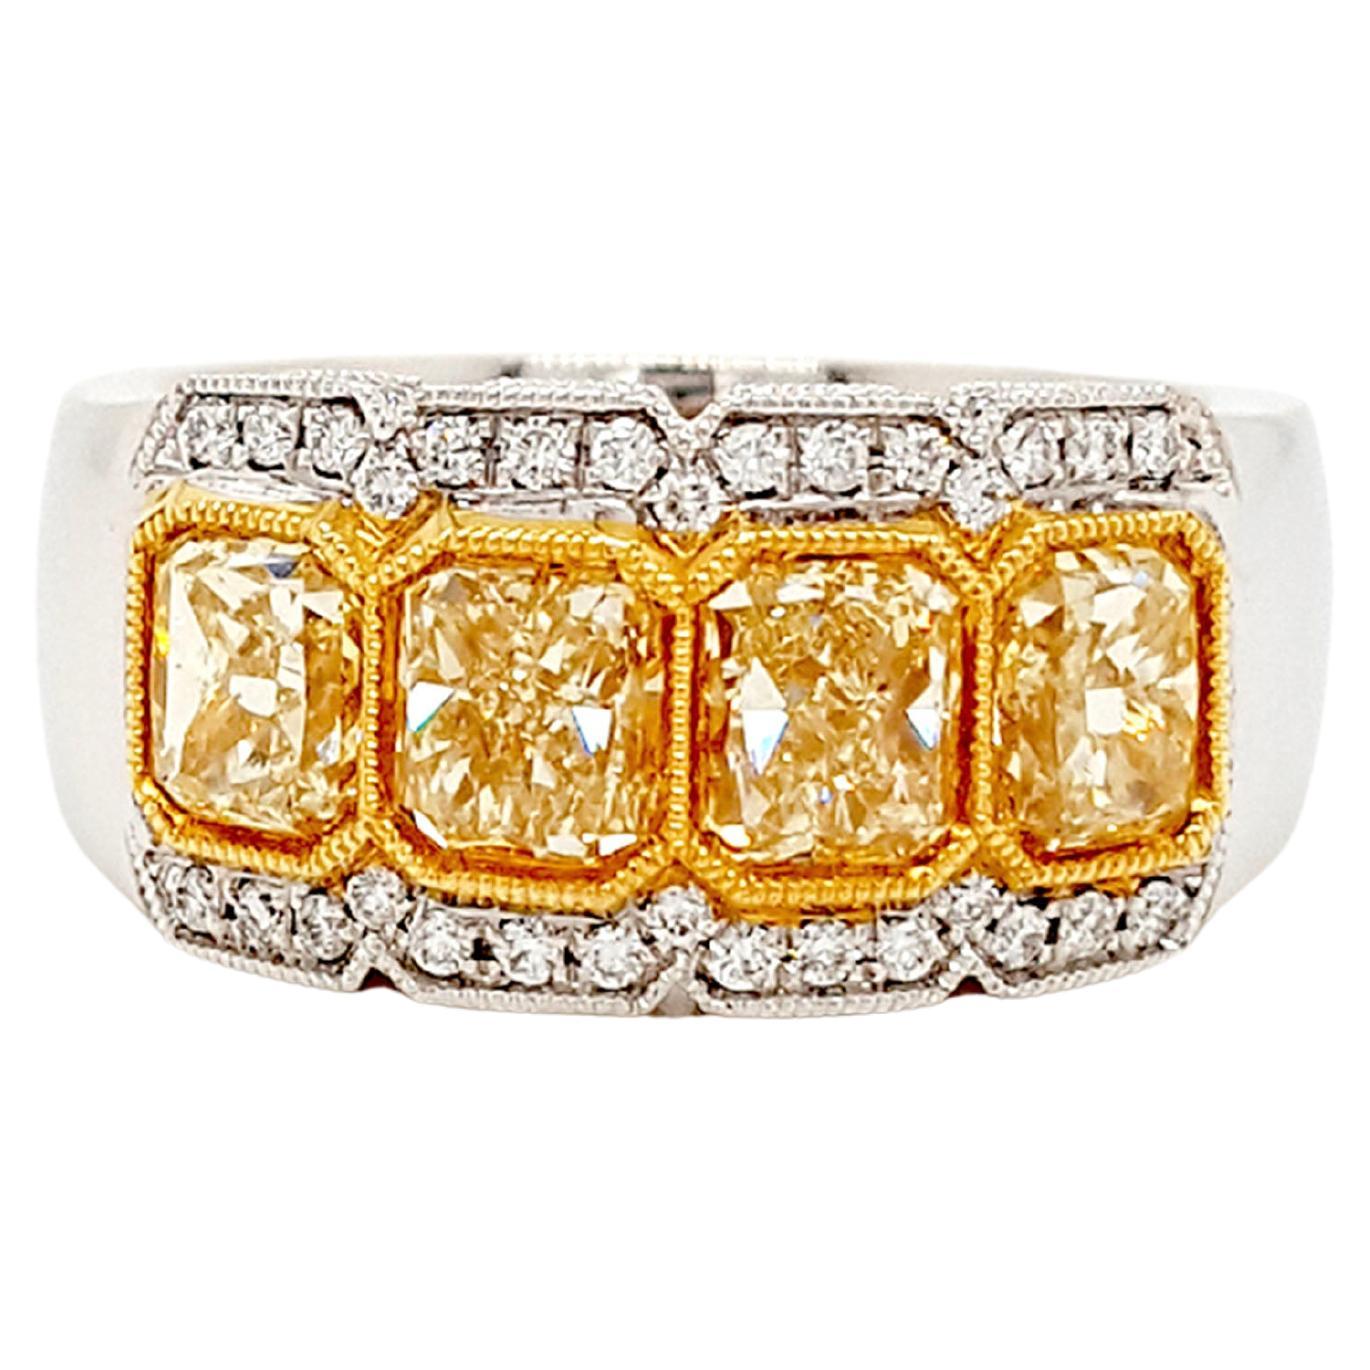 2.38 Carat Yellow Radiant Cut Four-Stone Diamond Ring in 18 Karat Gold. For Sale